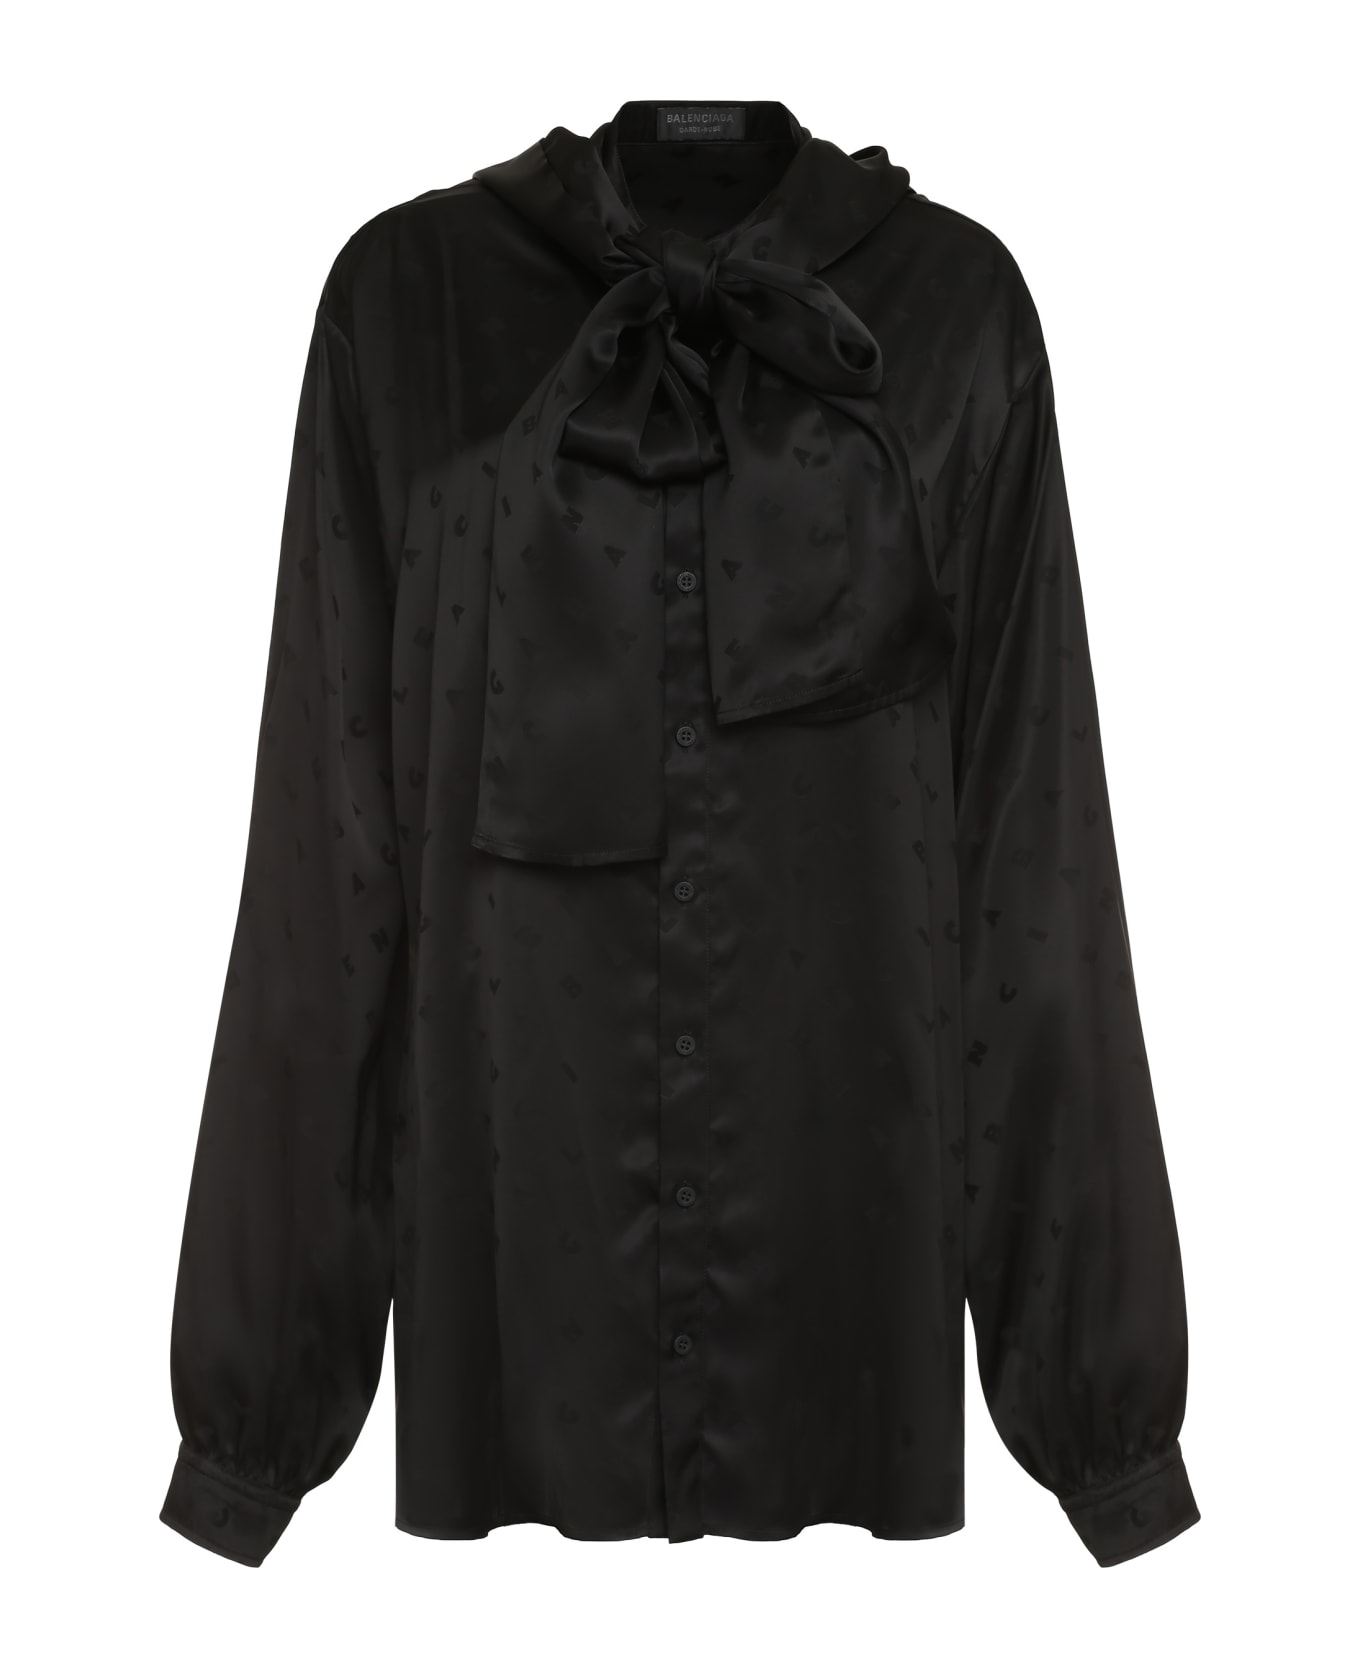 Balenciaga Jacquard Shirt - black ブラウス